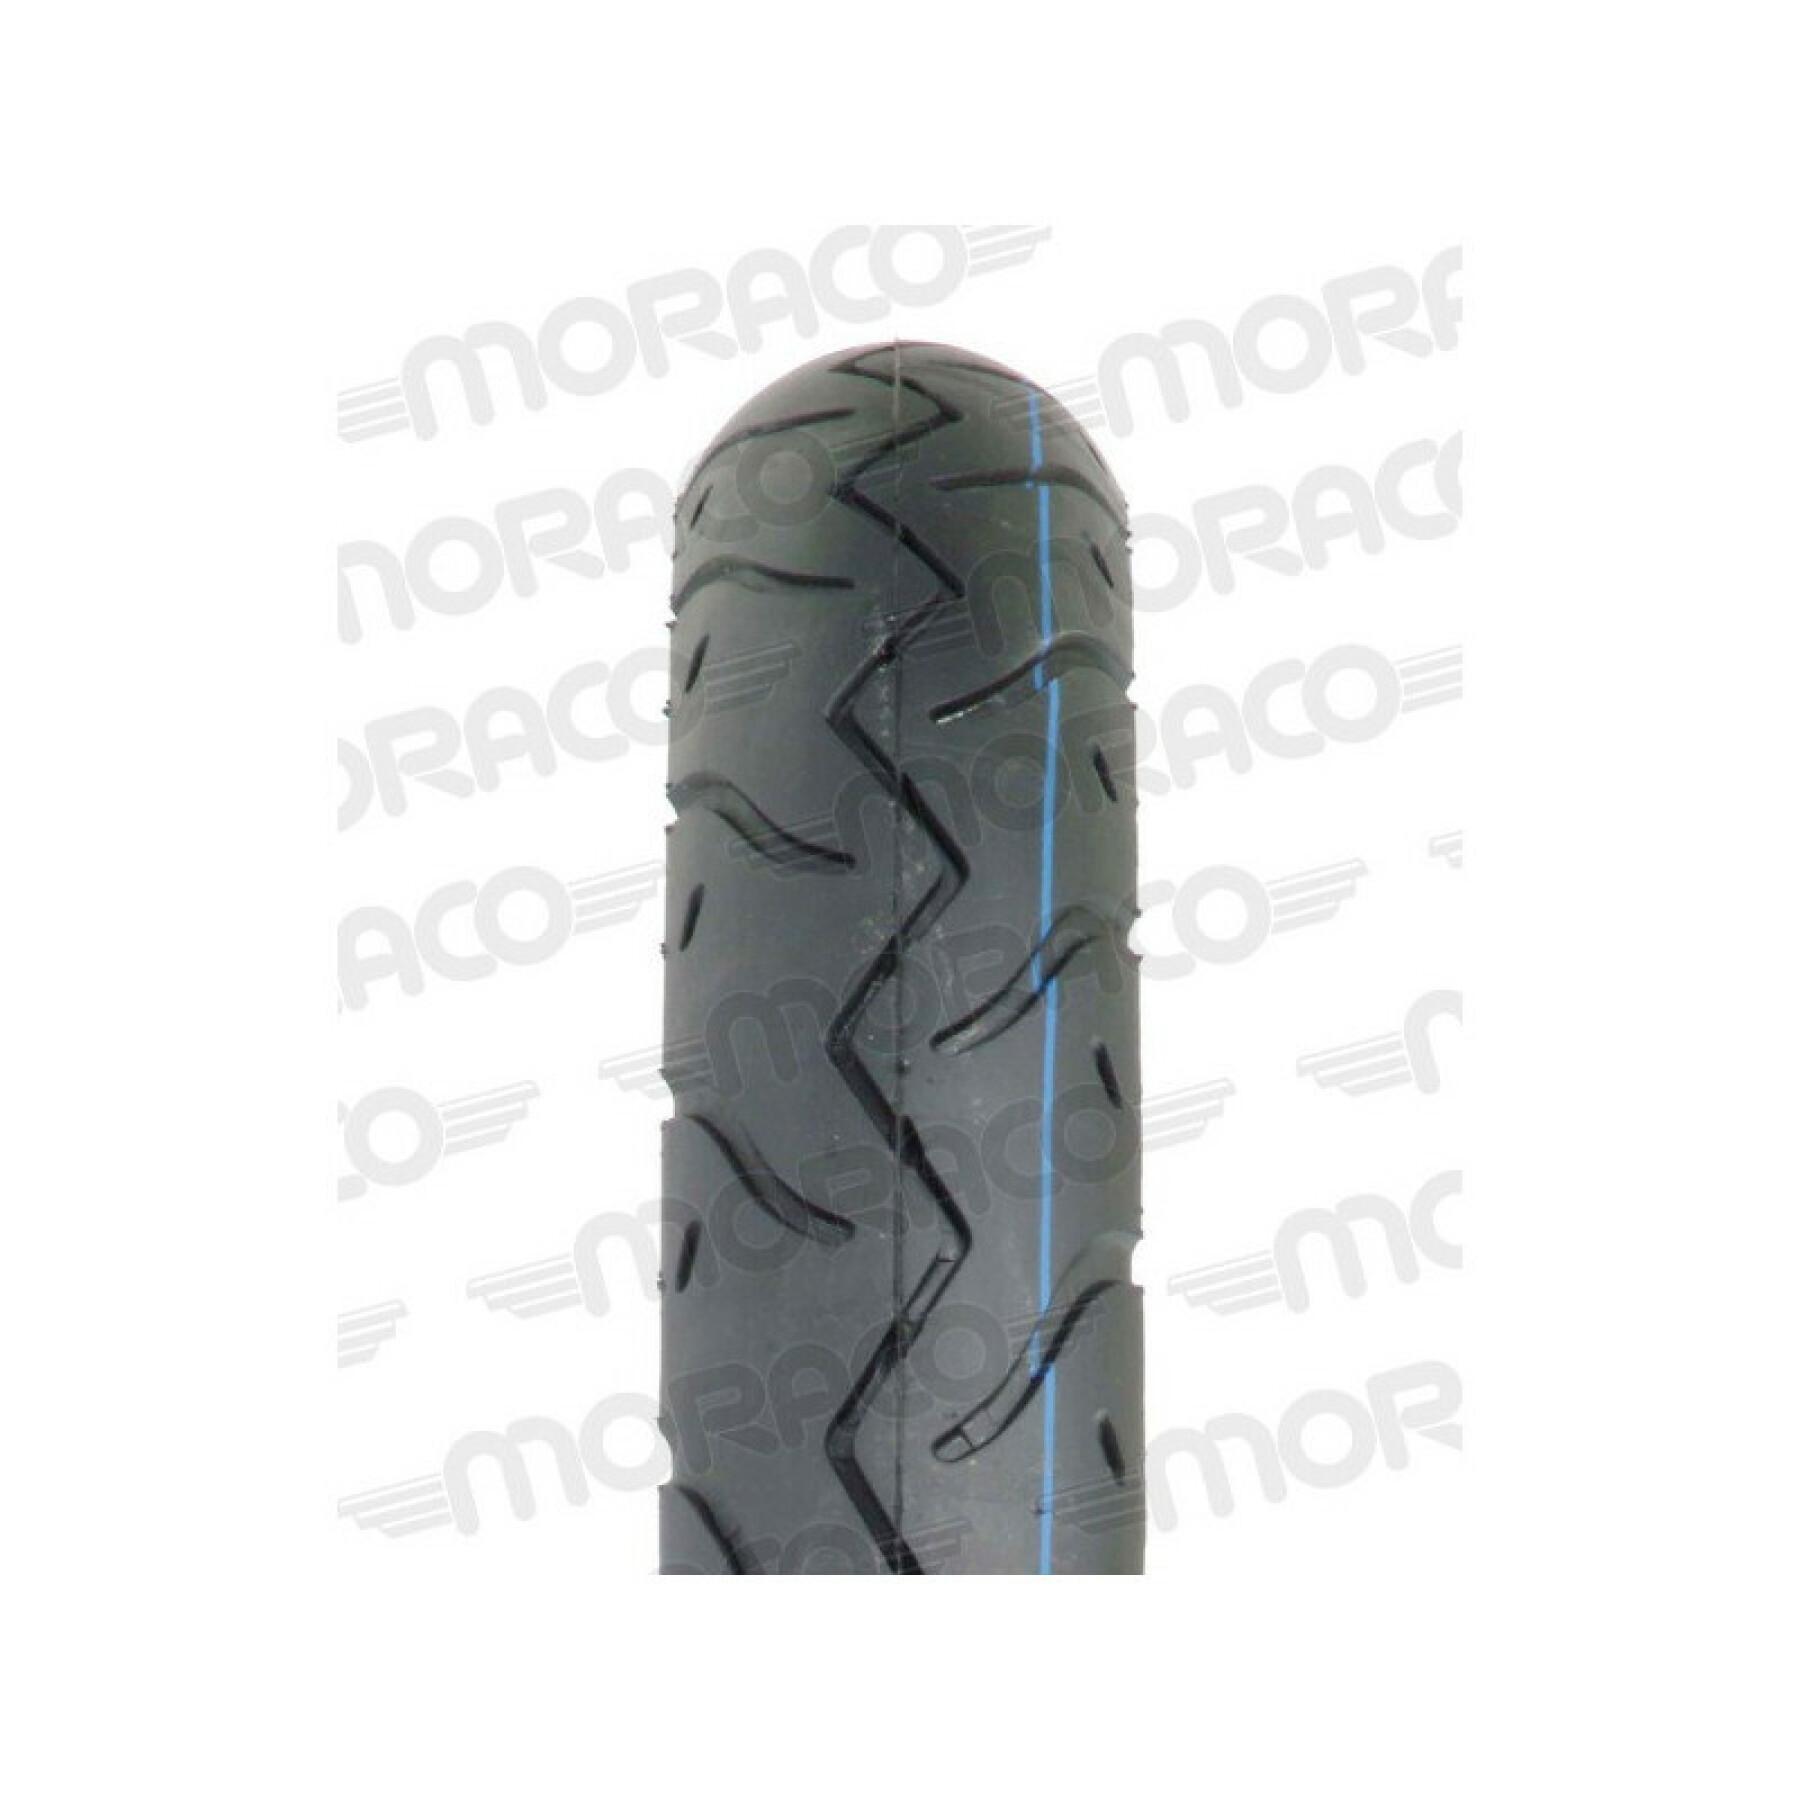 Tire Vee Rubber 2.1/4-17 VRM 099 TBL (5)